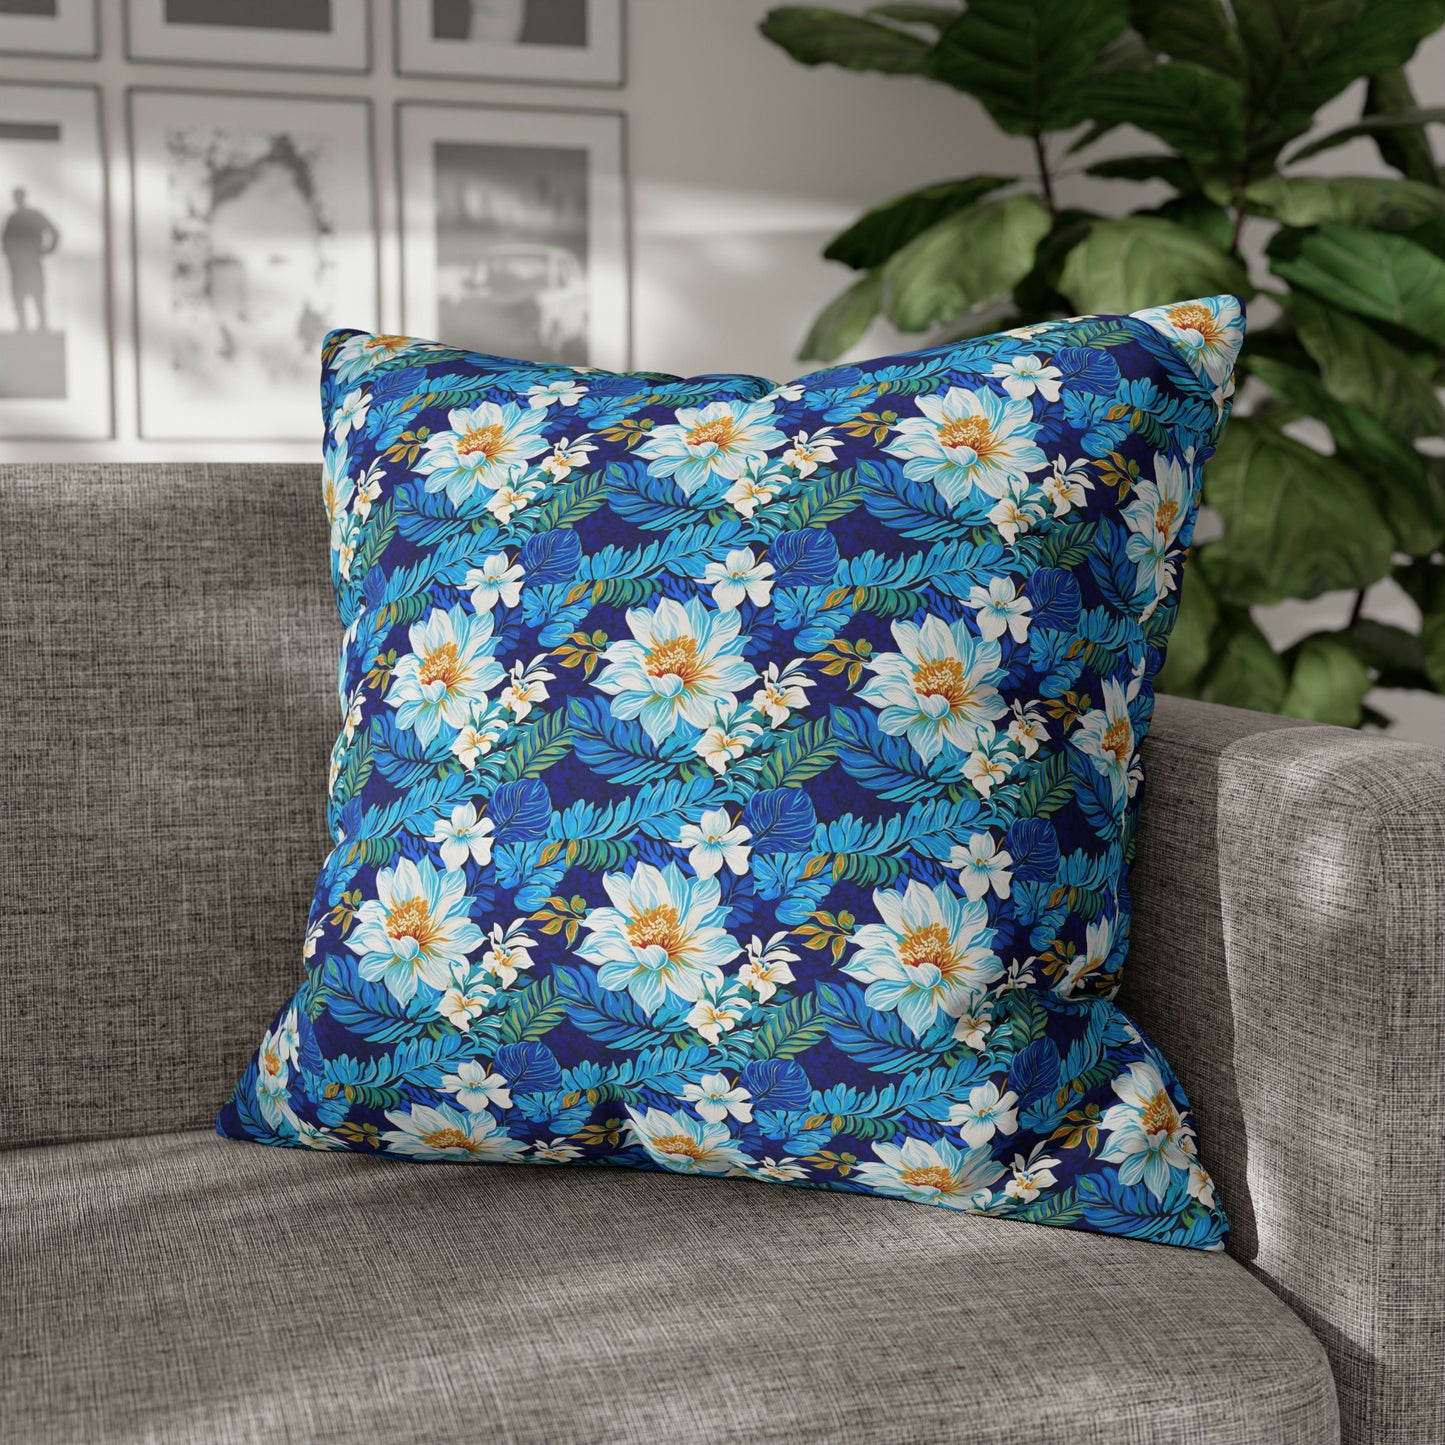 Hawaiian White Orchid Tropical Paradise Luau Decorative Spun Polyester Pillow Cover